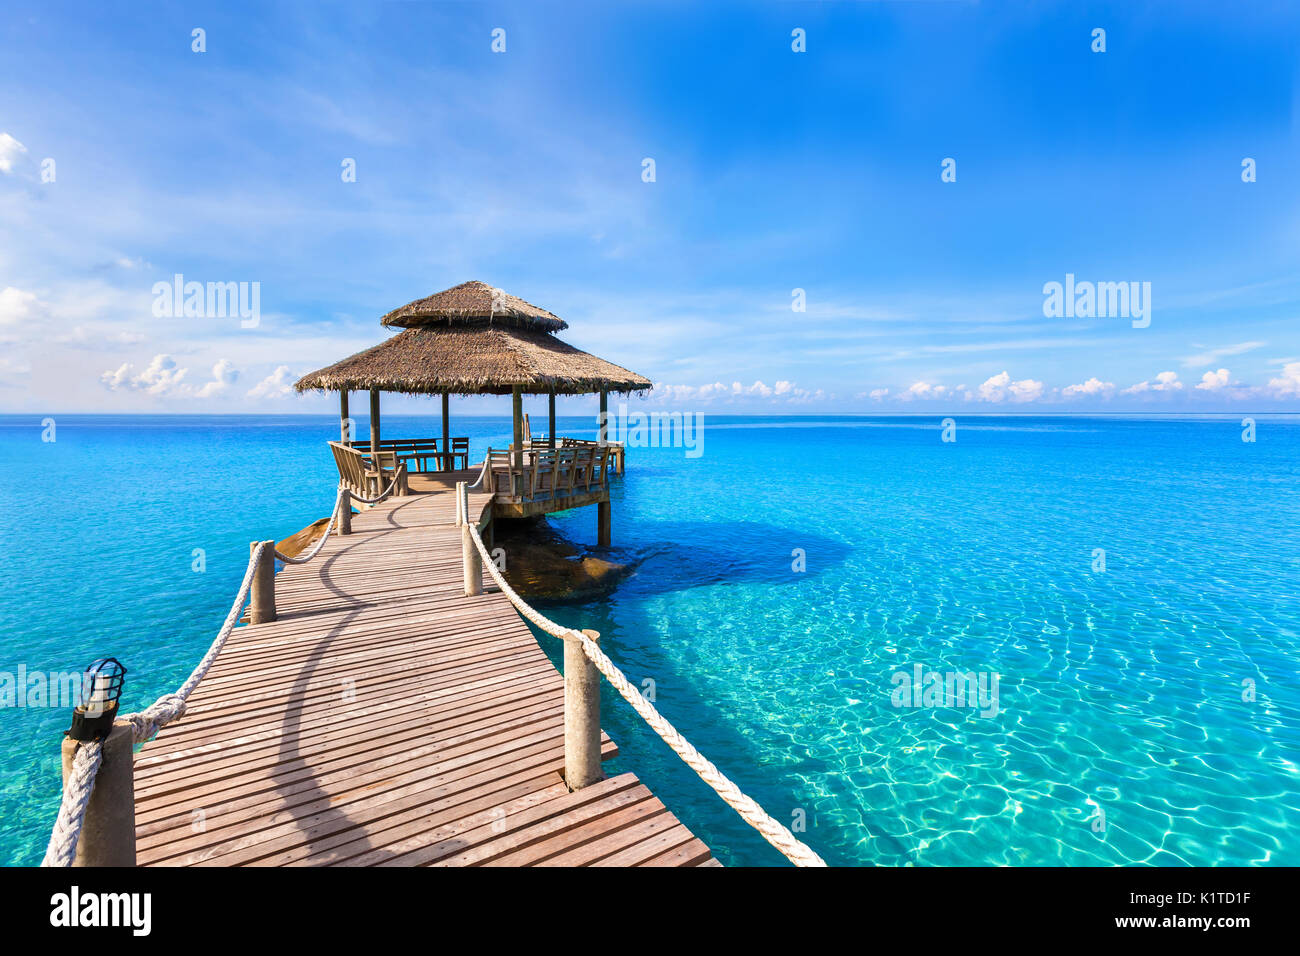 Hermoso paisaje de playa, verano tropical lujoso hotel muelle de madera con agua de mar turquesa transparente Foto de stock